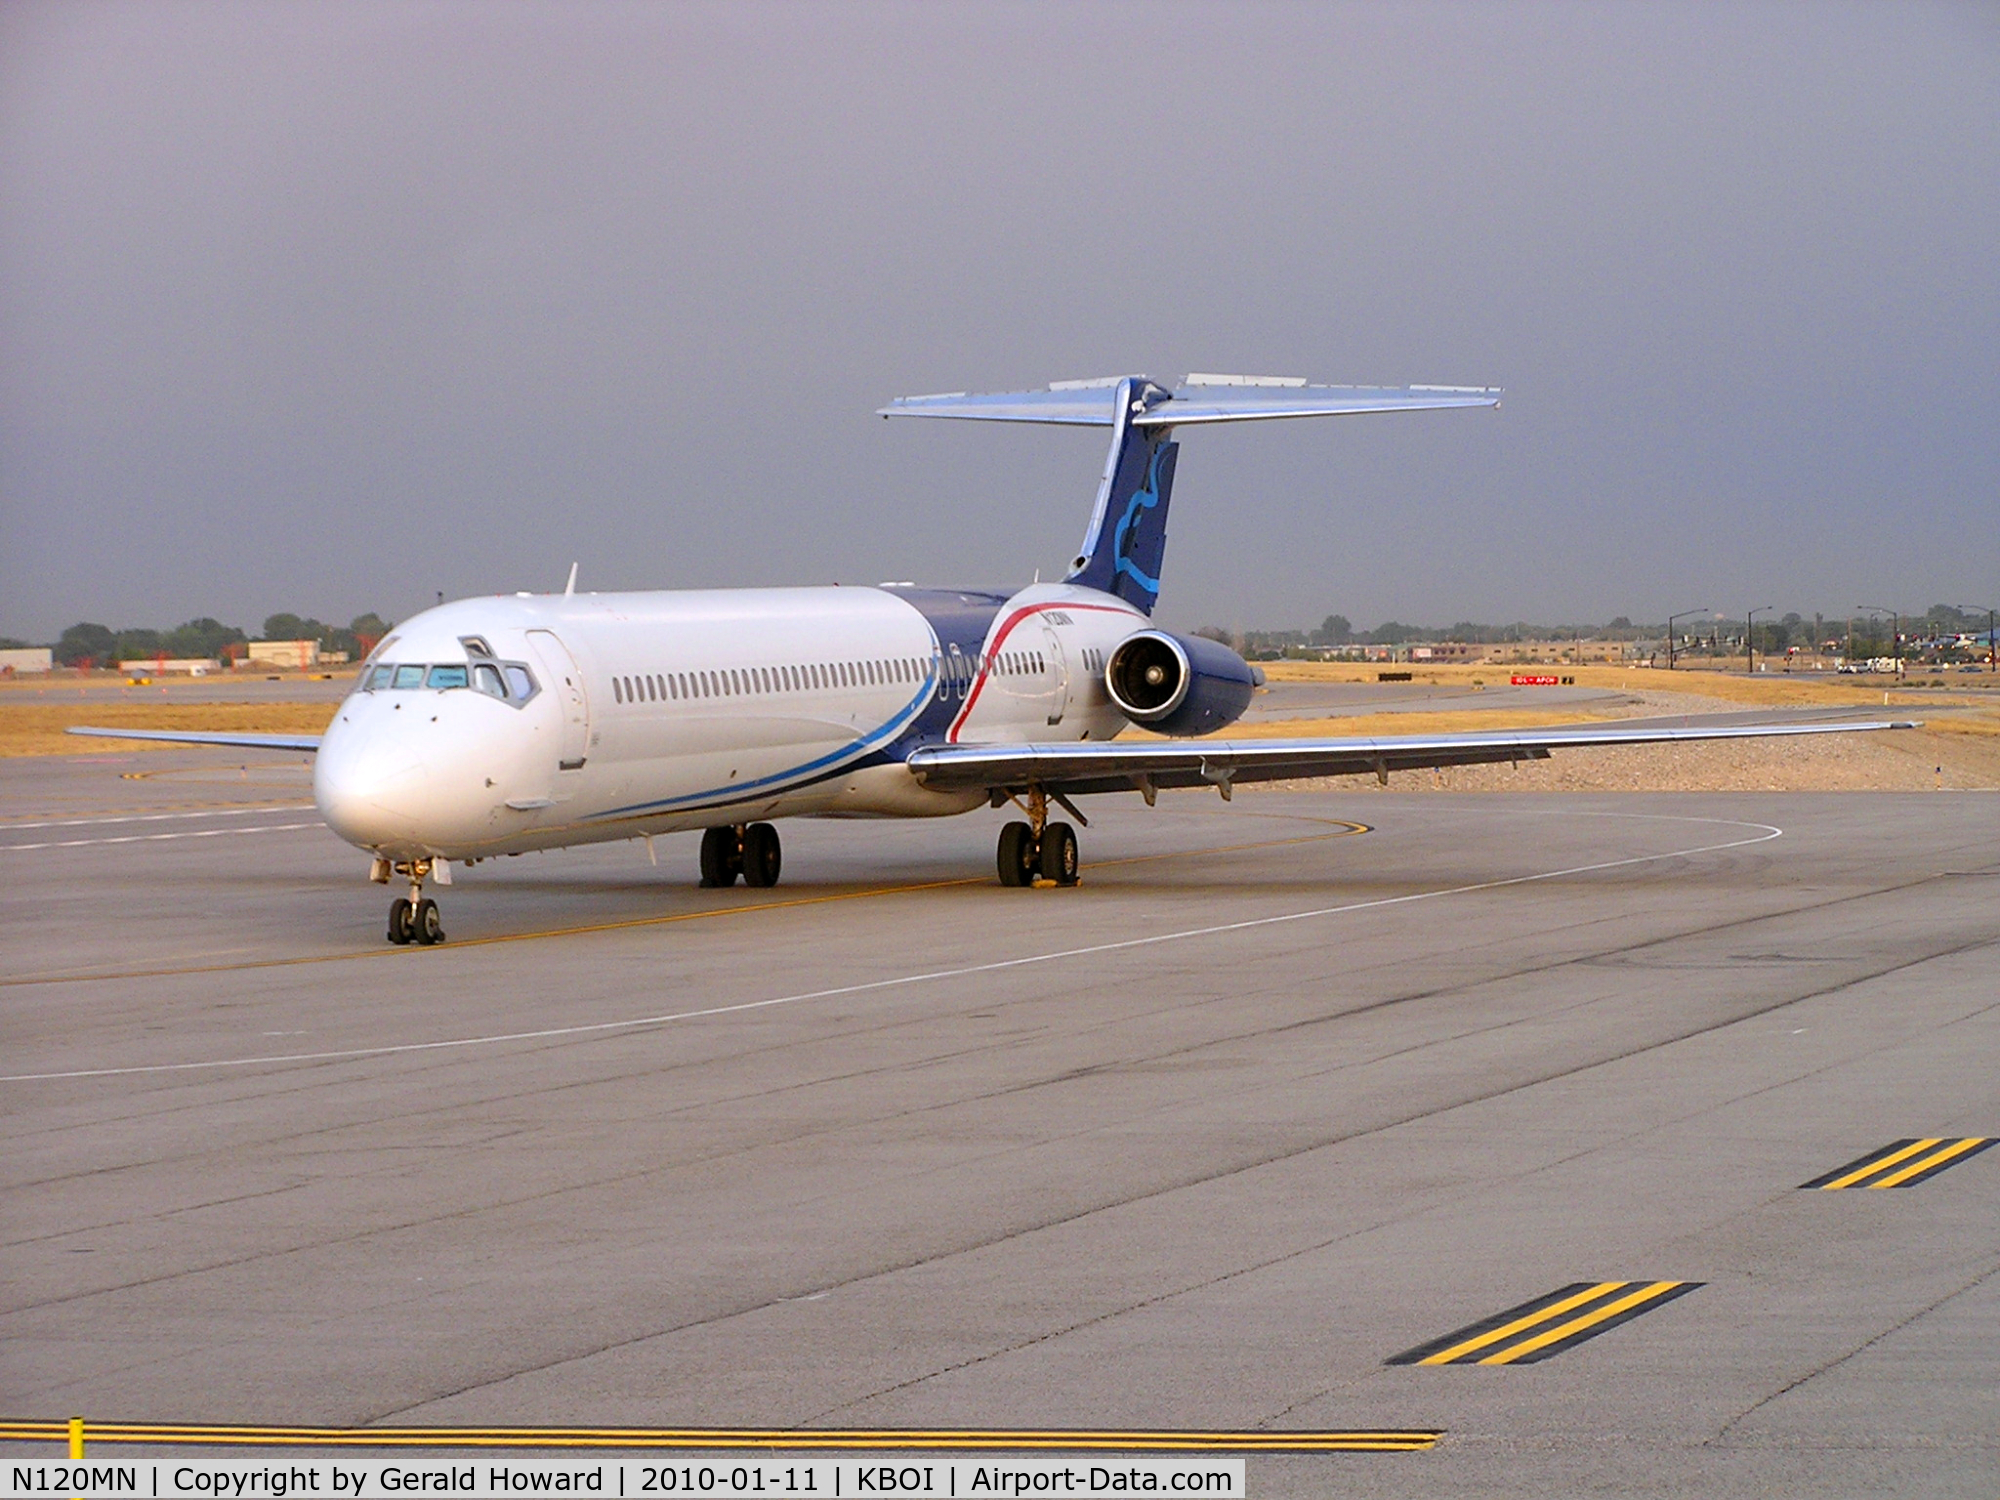 N120MN, 1992 McDonnell Douglas MD-83 C/N 53120, Charter aircraft.